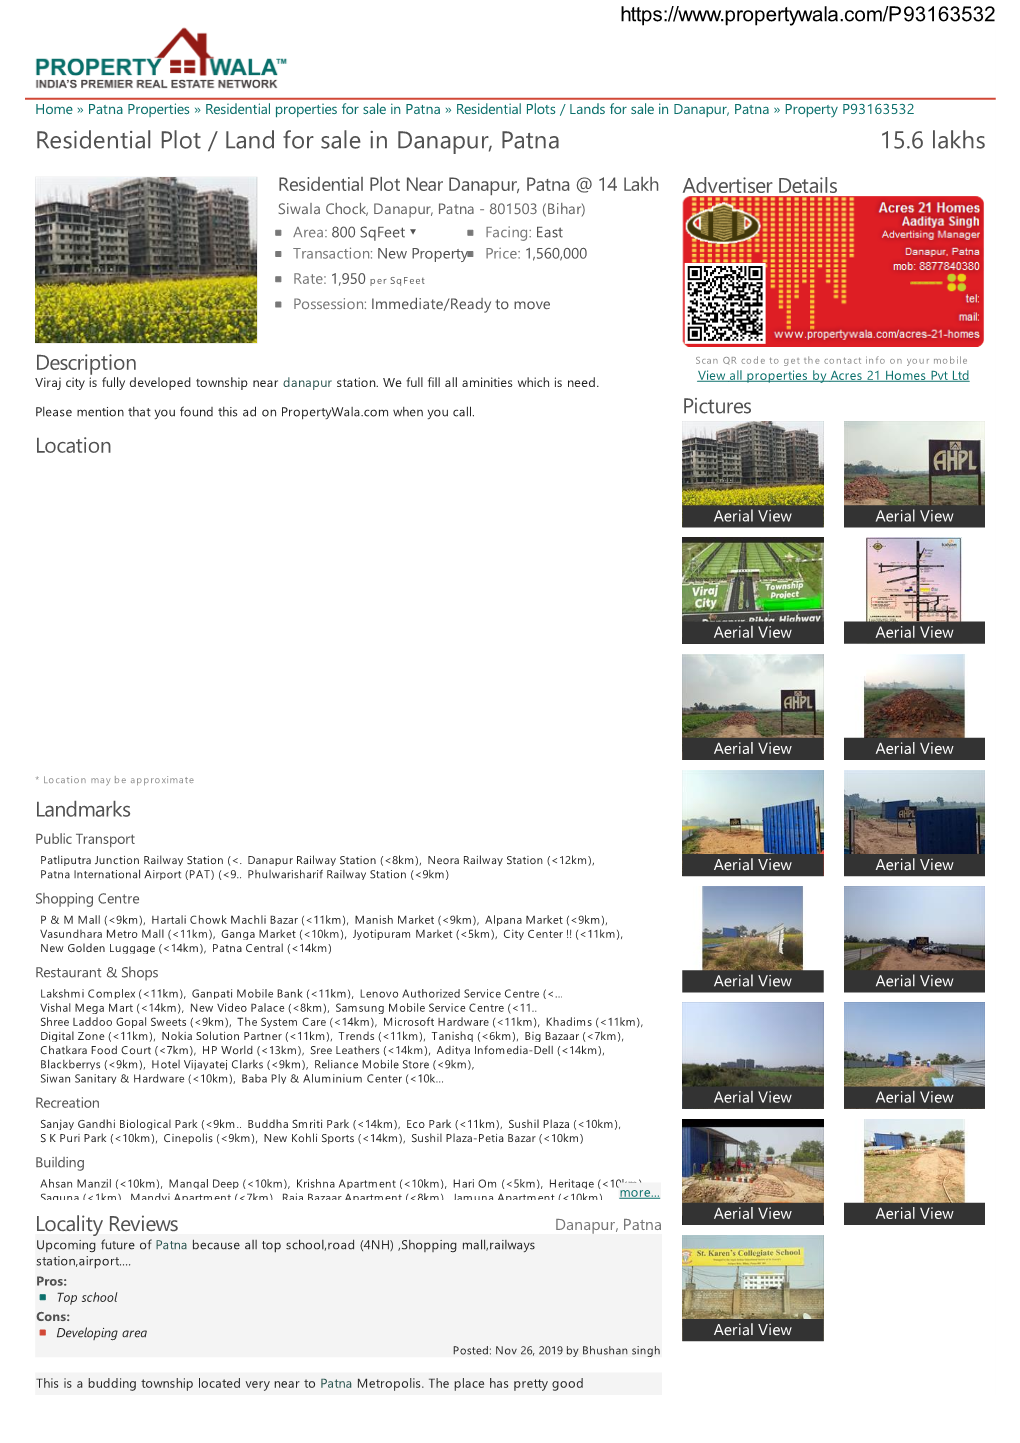 Residential Plot / Land for Sale in Danapur, Patna (P93163532